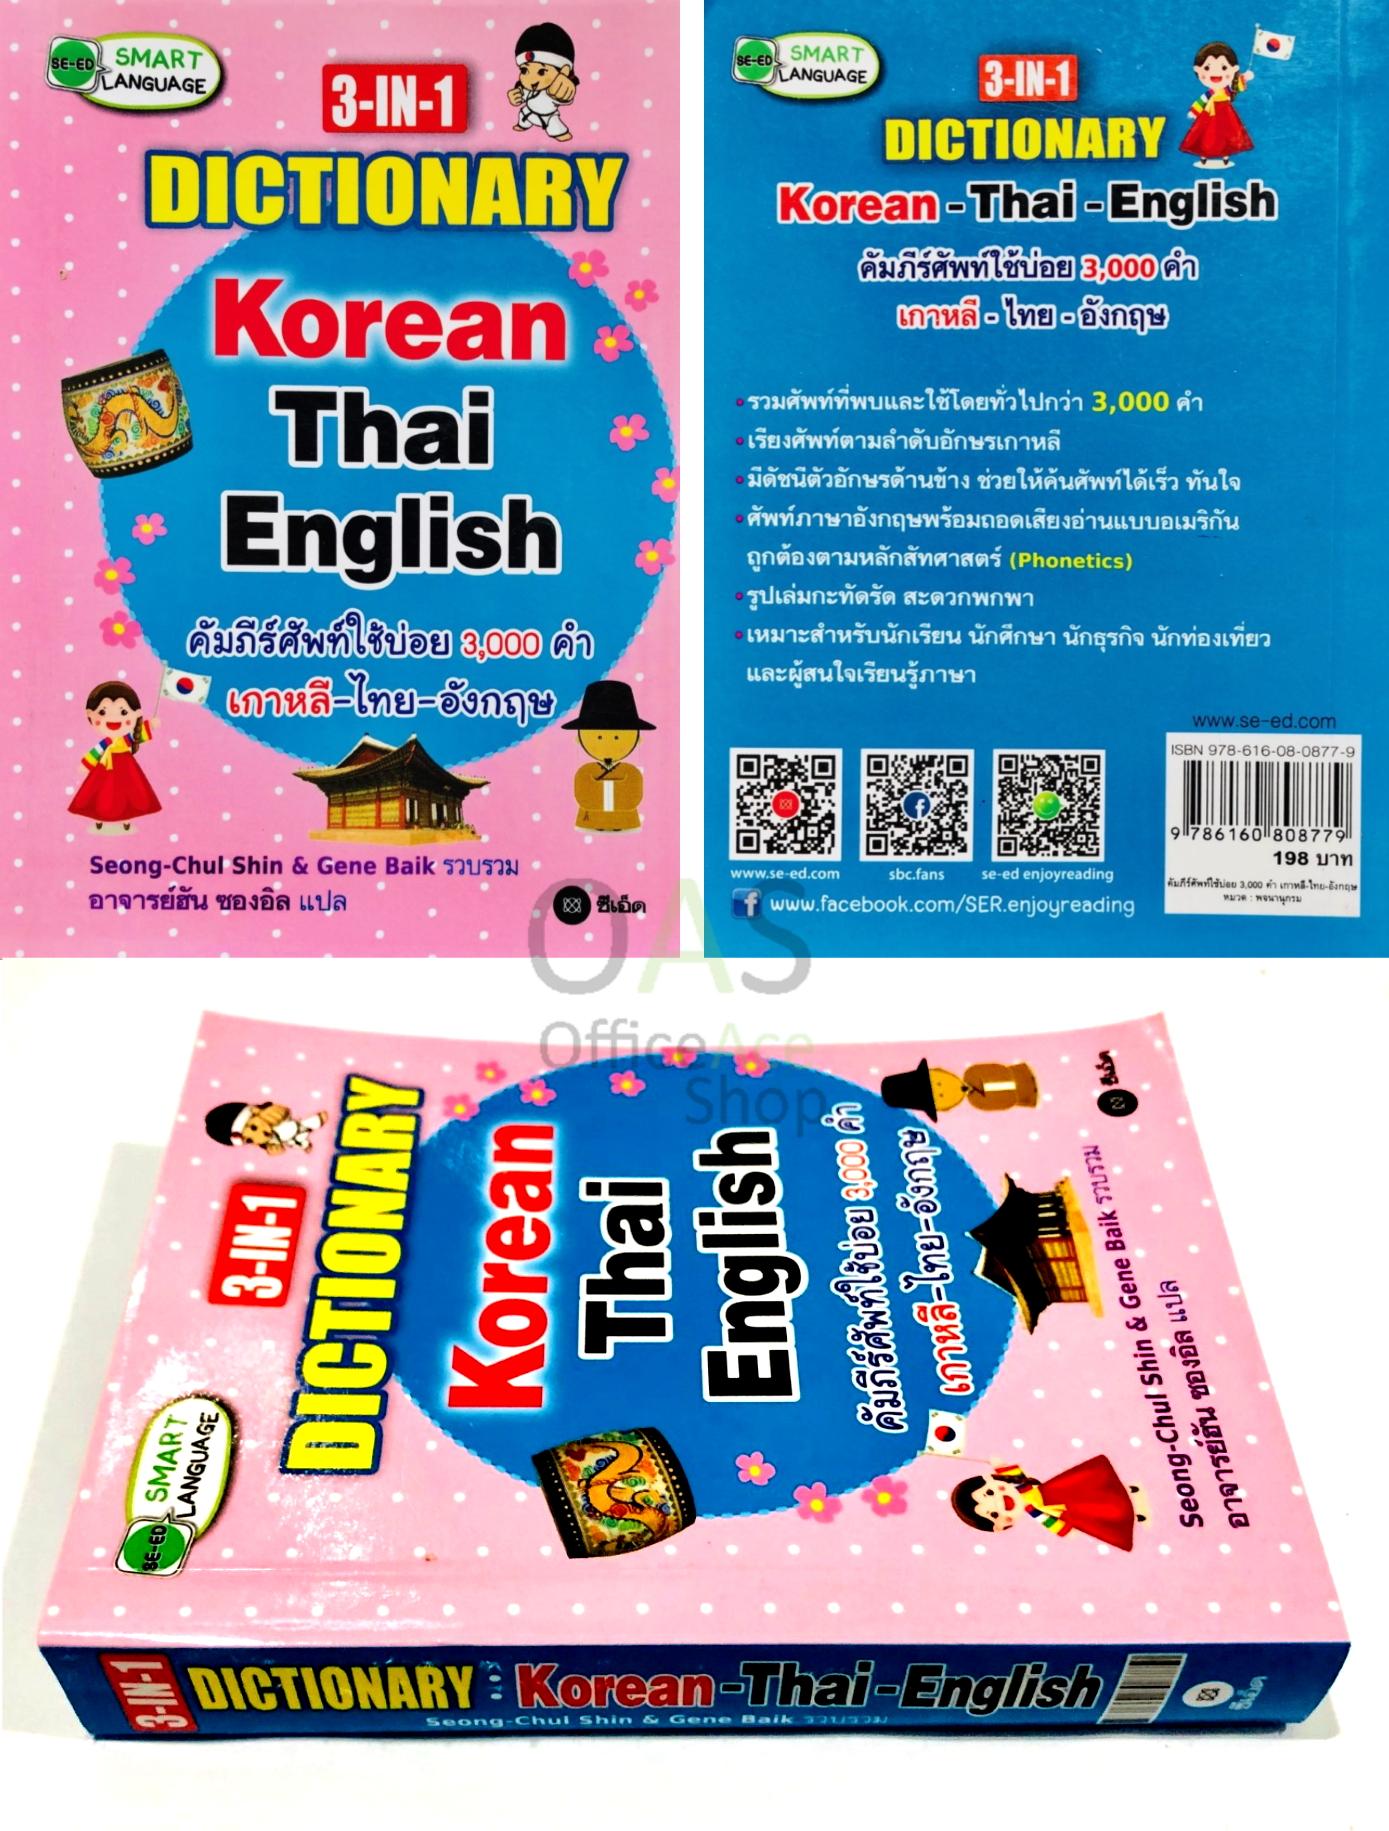 3-IN-1 Dictionary Korean Thai English เกาหลี-ไทย-อังกฤษ คัมภีร์ศัพท์ใช้บ่อย 3000 คำ โดยอาจารย์ฮัน ซองอิล